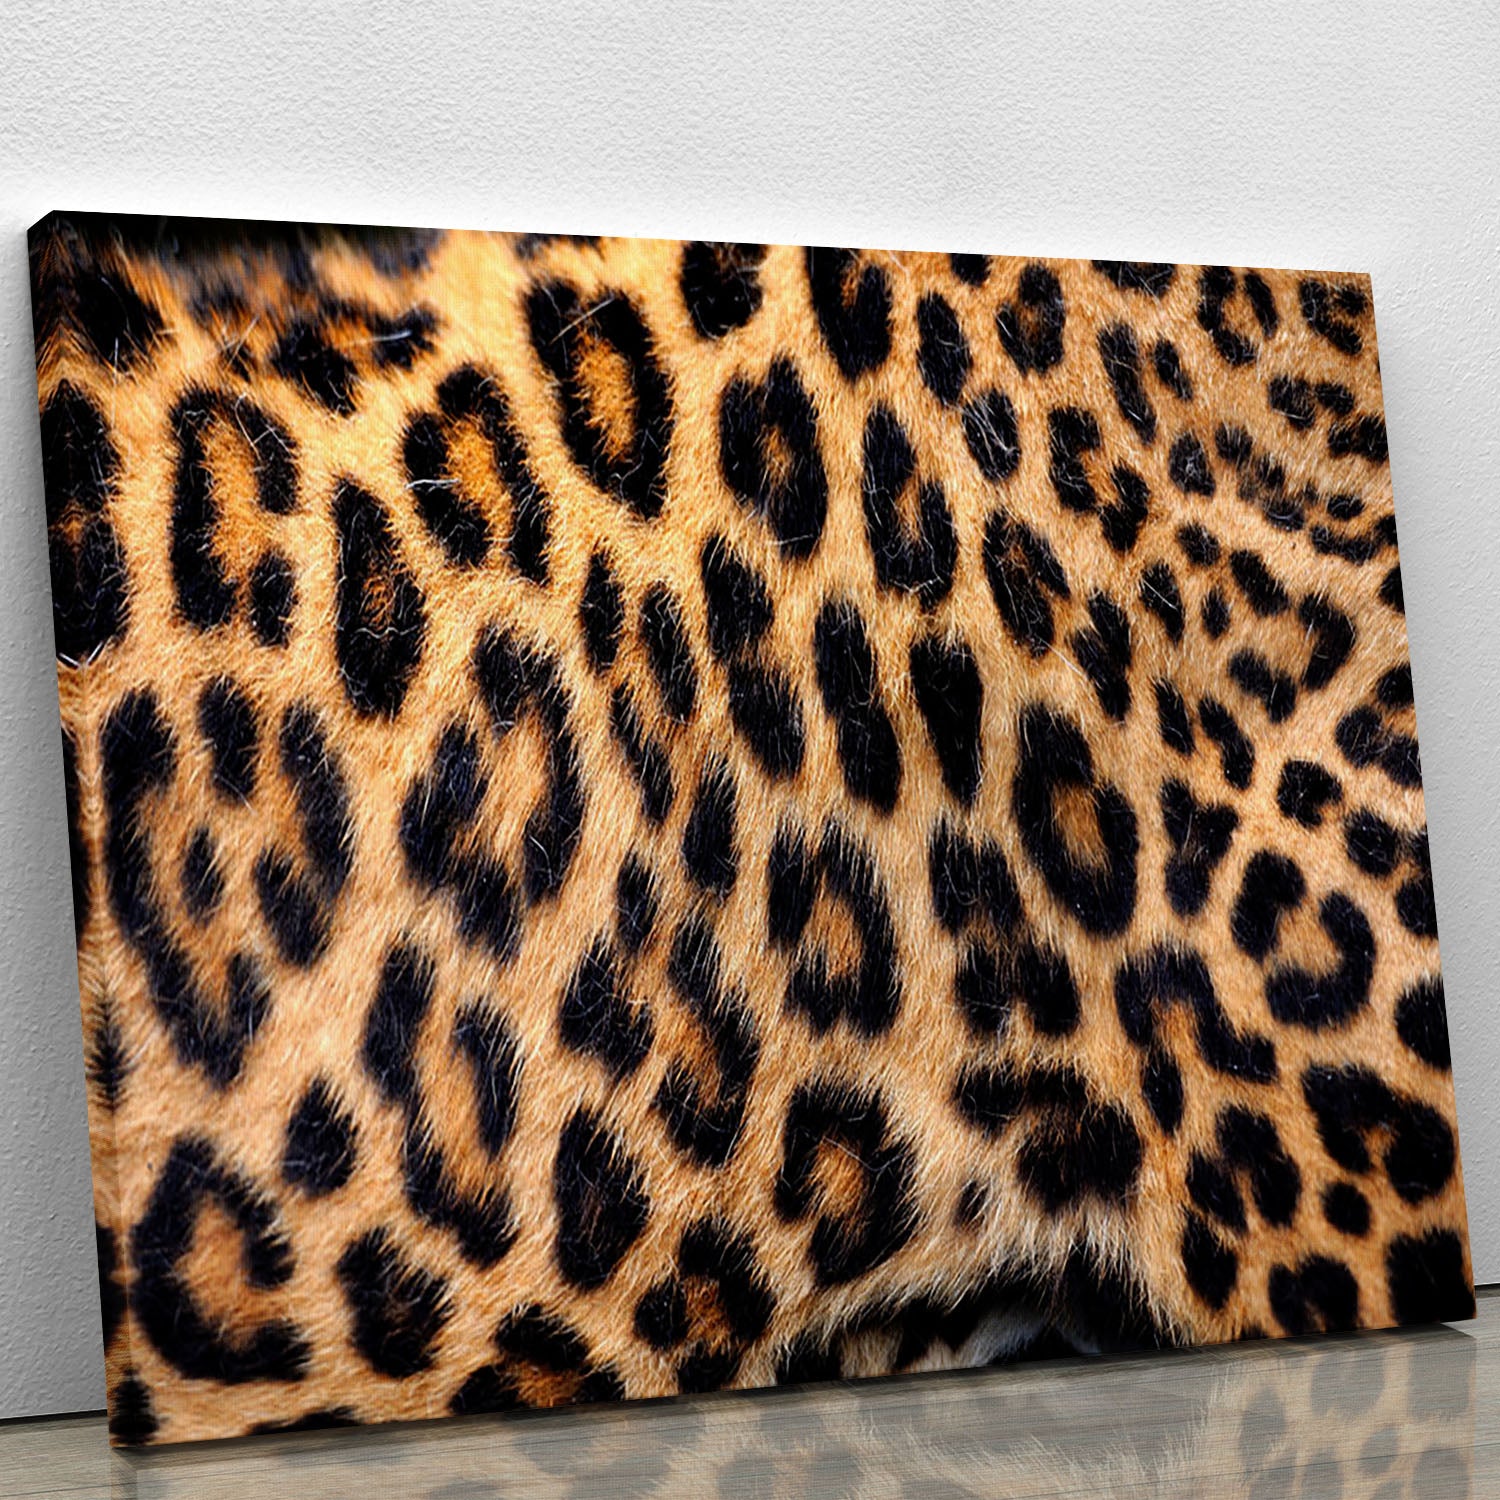 Leopard skin texture Canvas Print or Poster - Canvas Art Rocks - 1